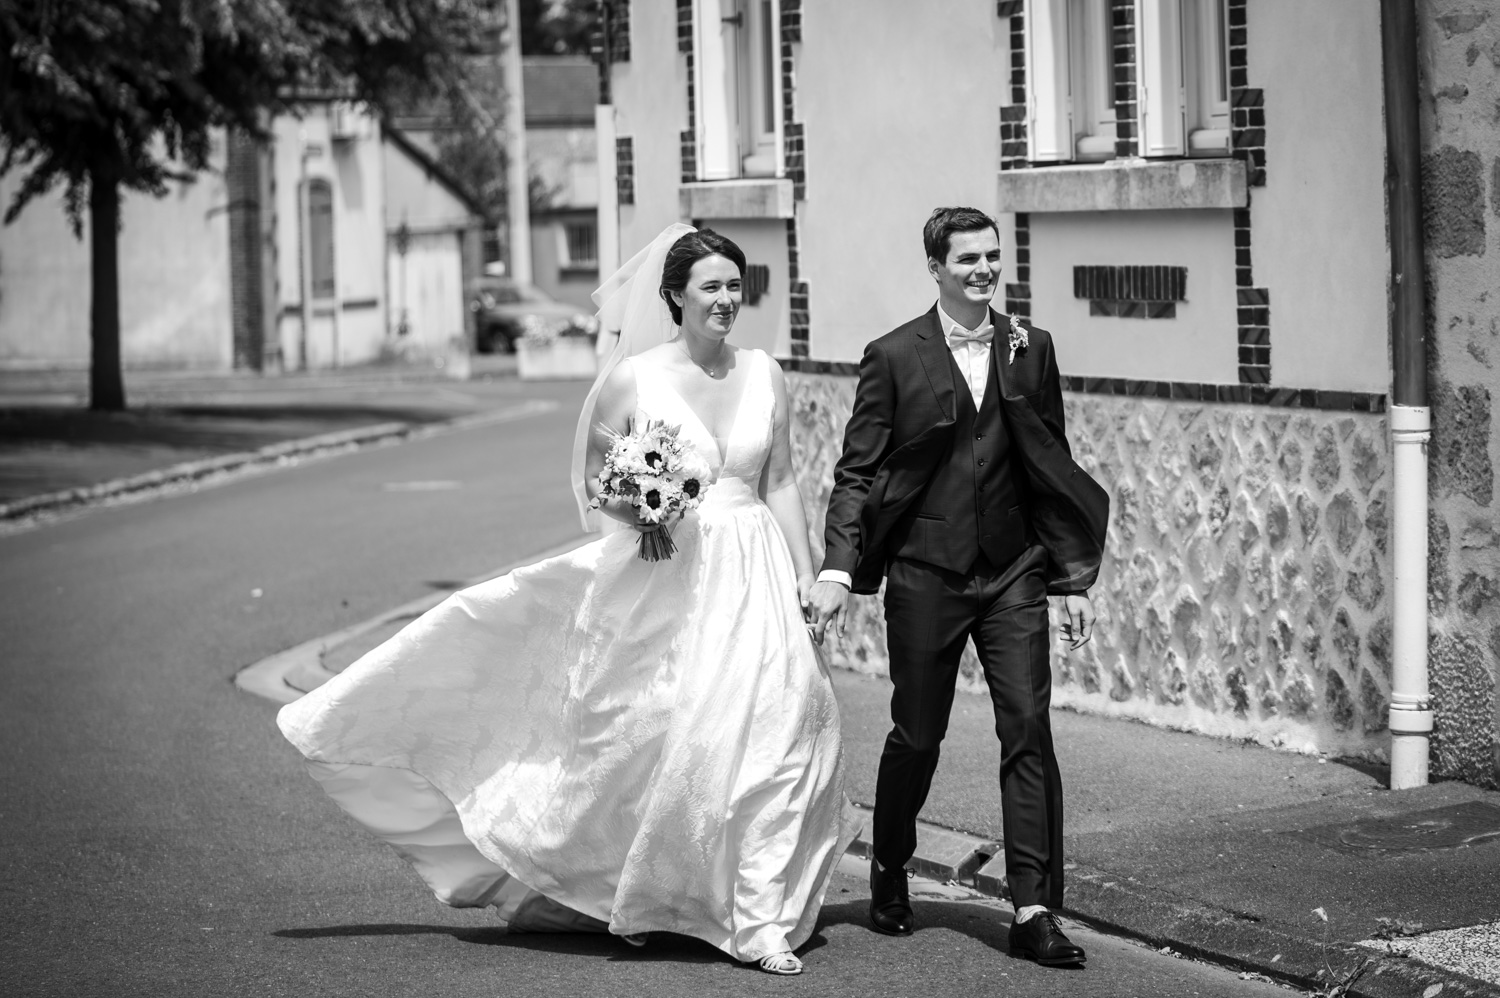 Photographe de mariage - Rouen, Seine Maritime, Normandie